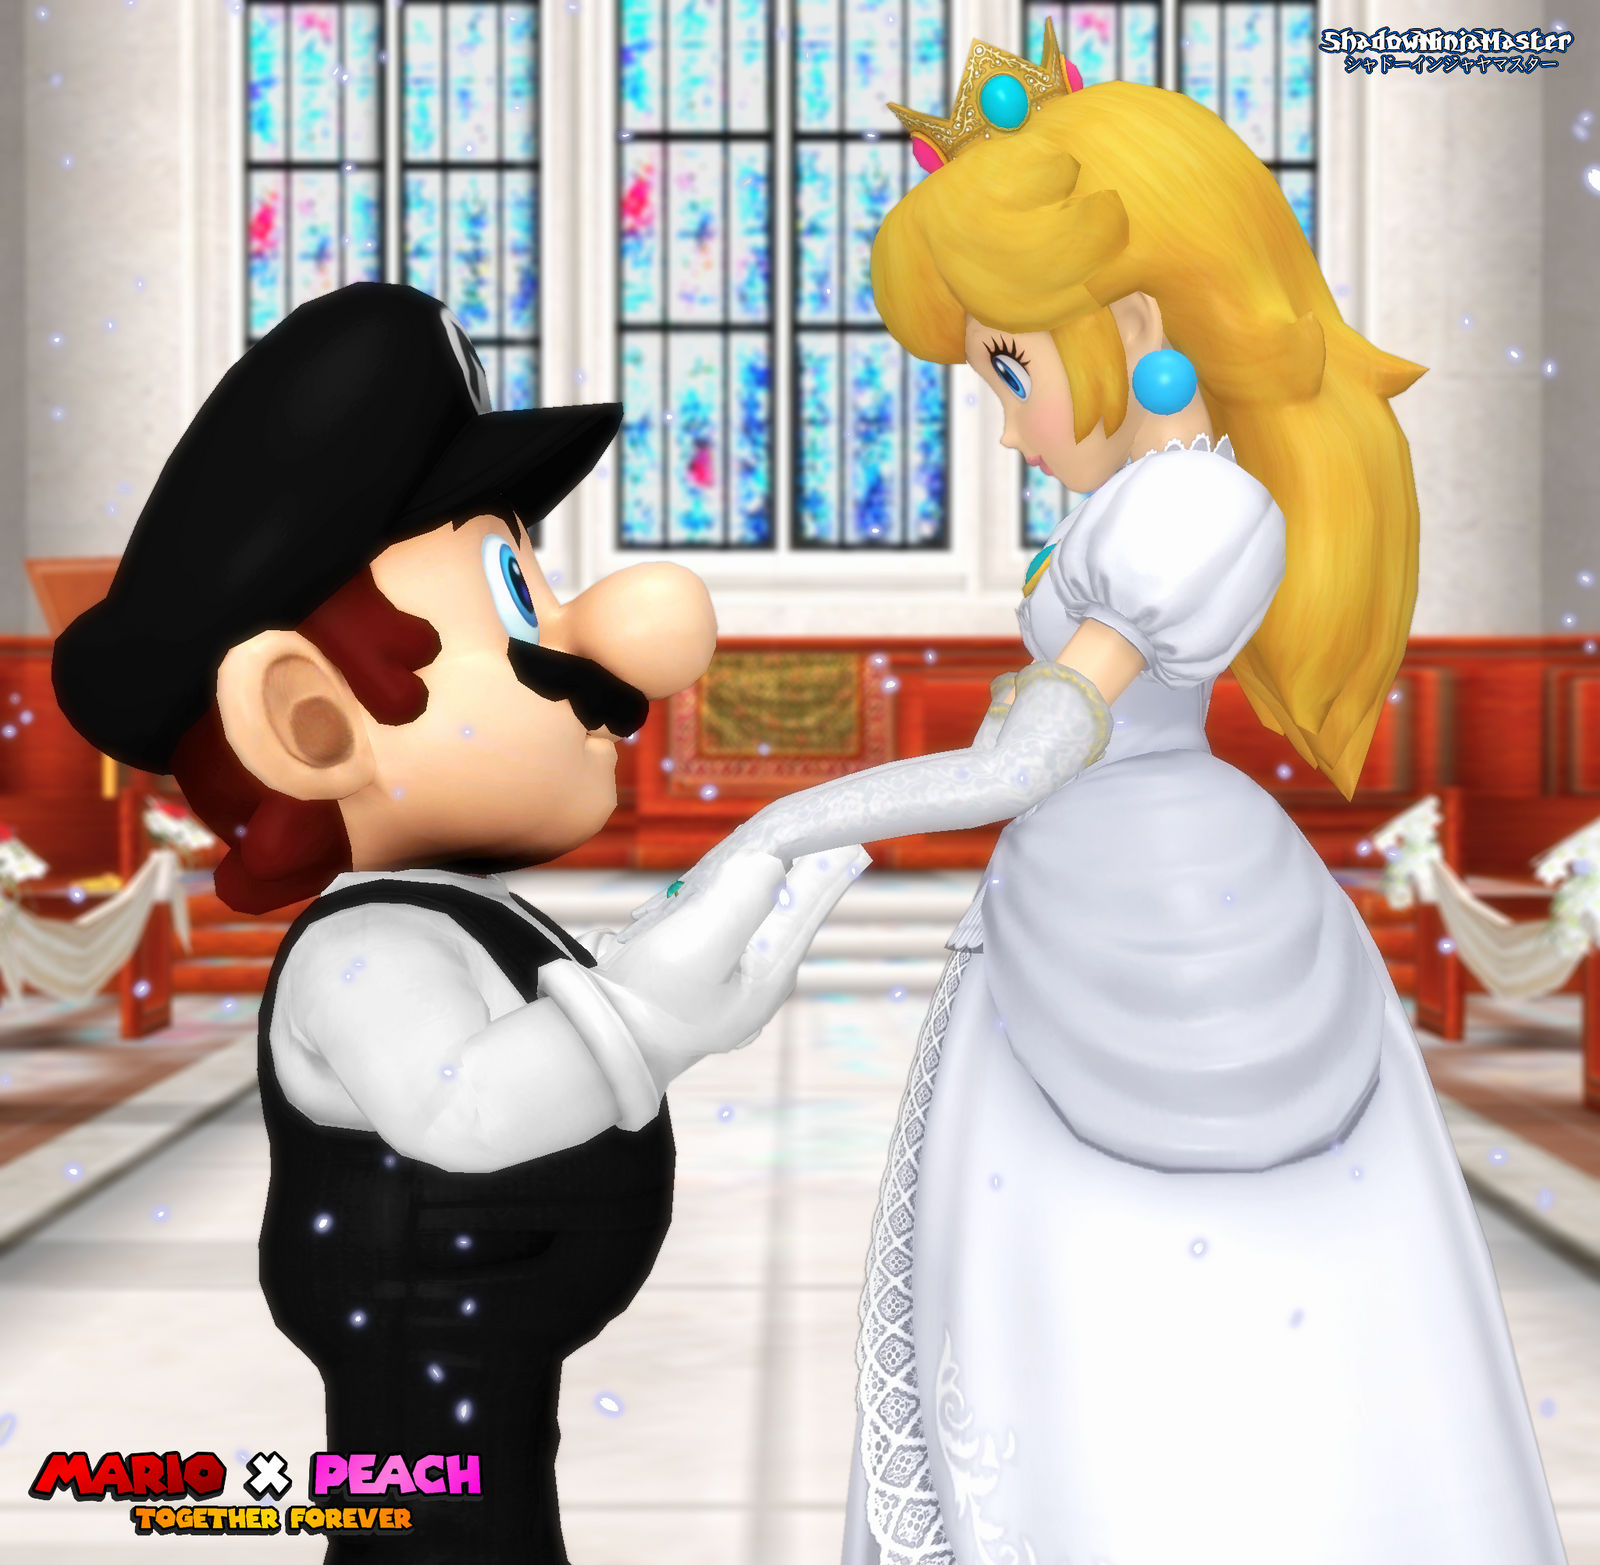 Mario & Princess Peach - Forever in Love on Vimeo